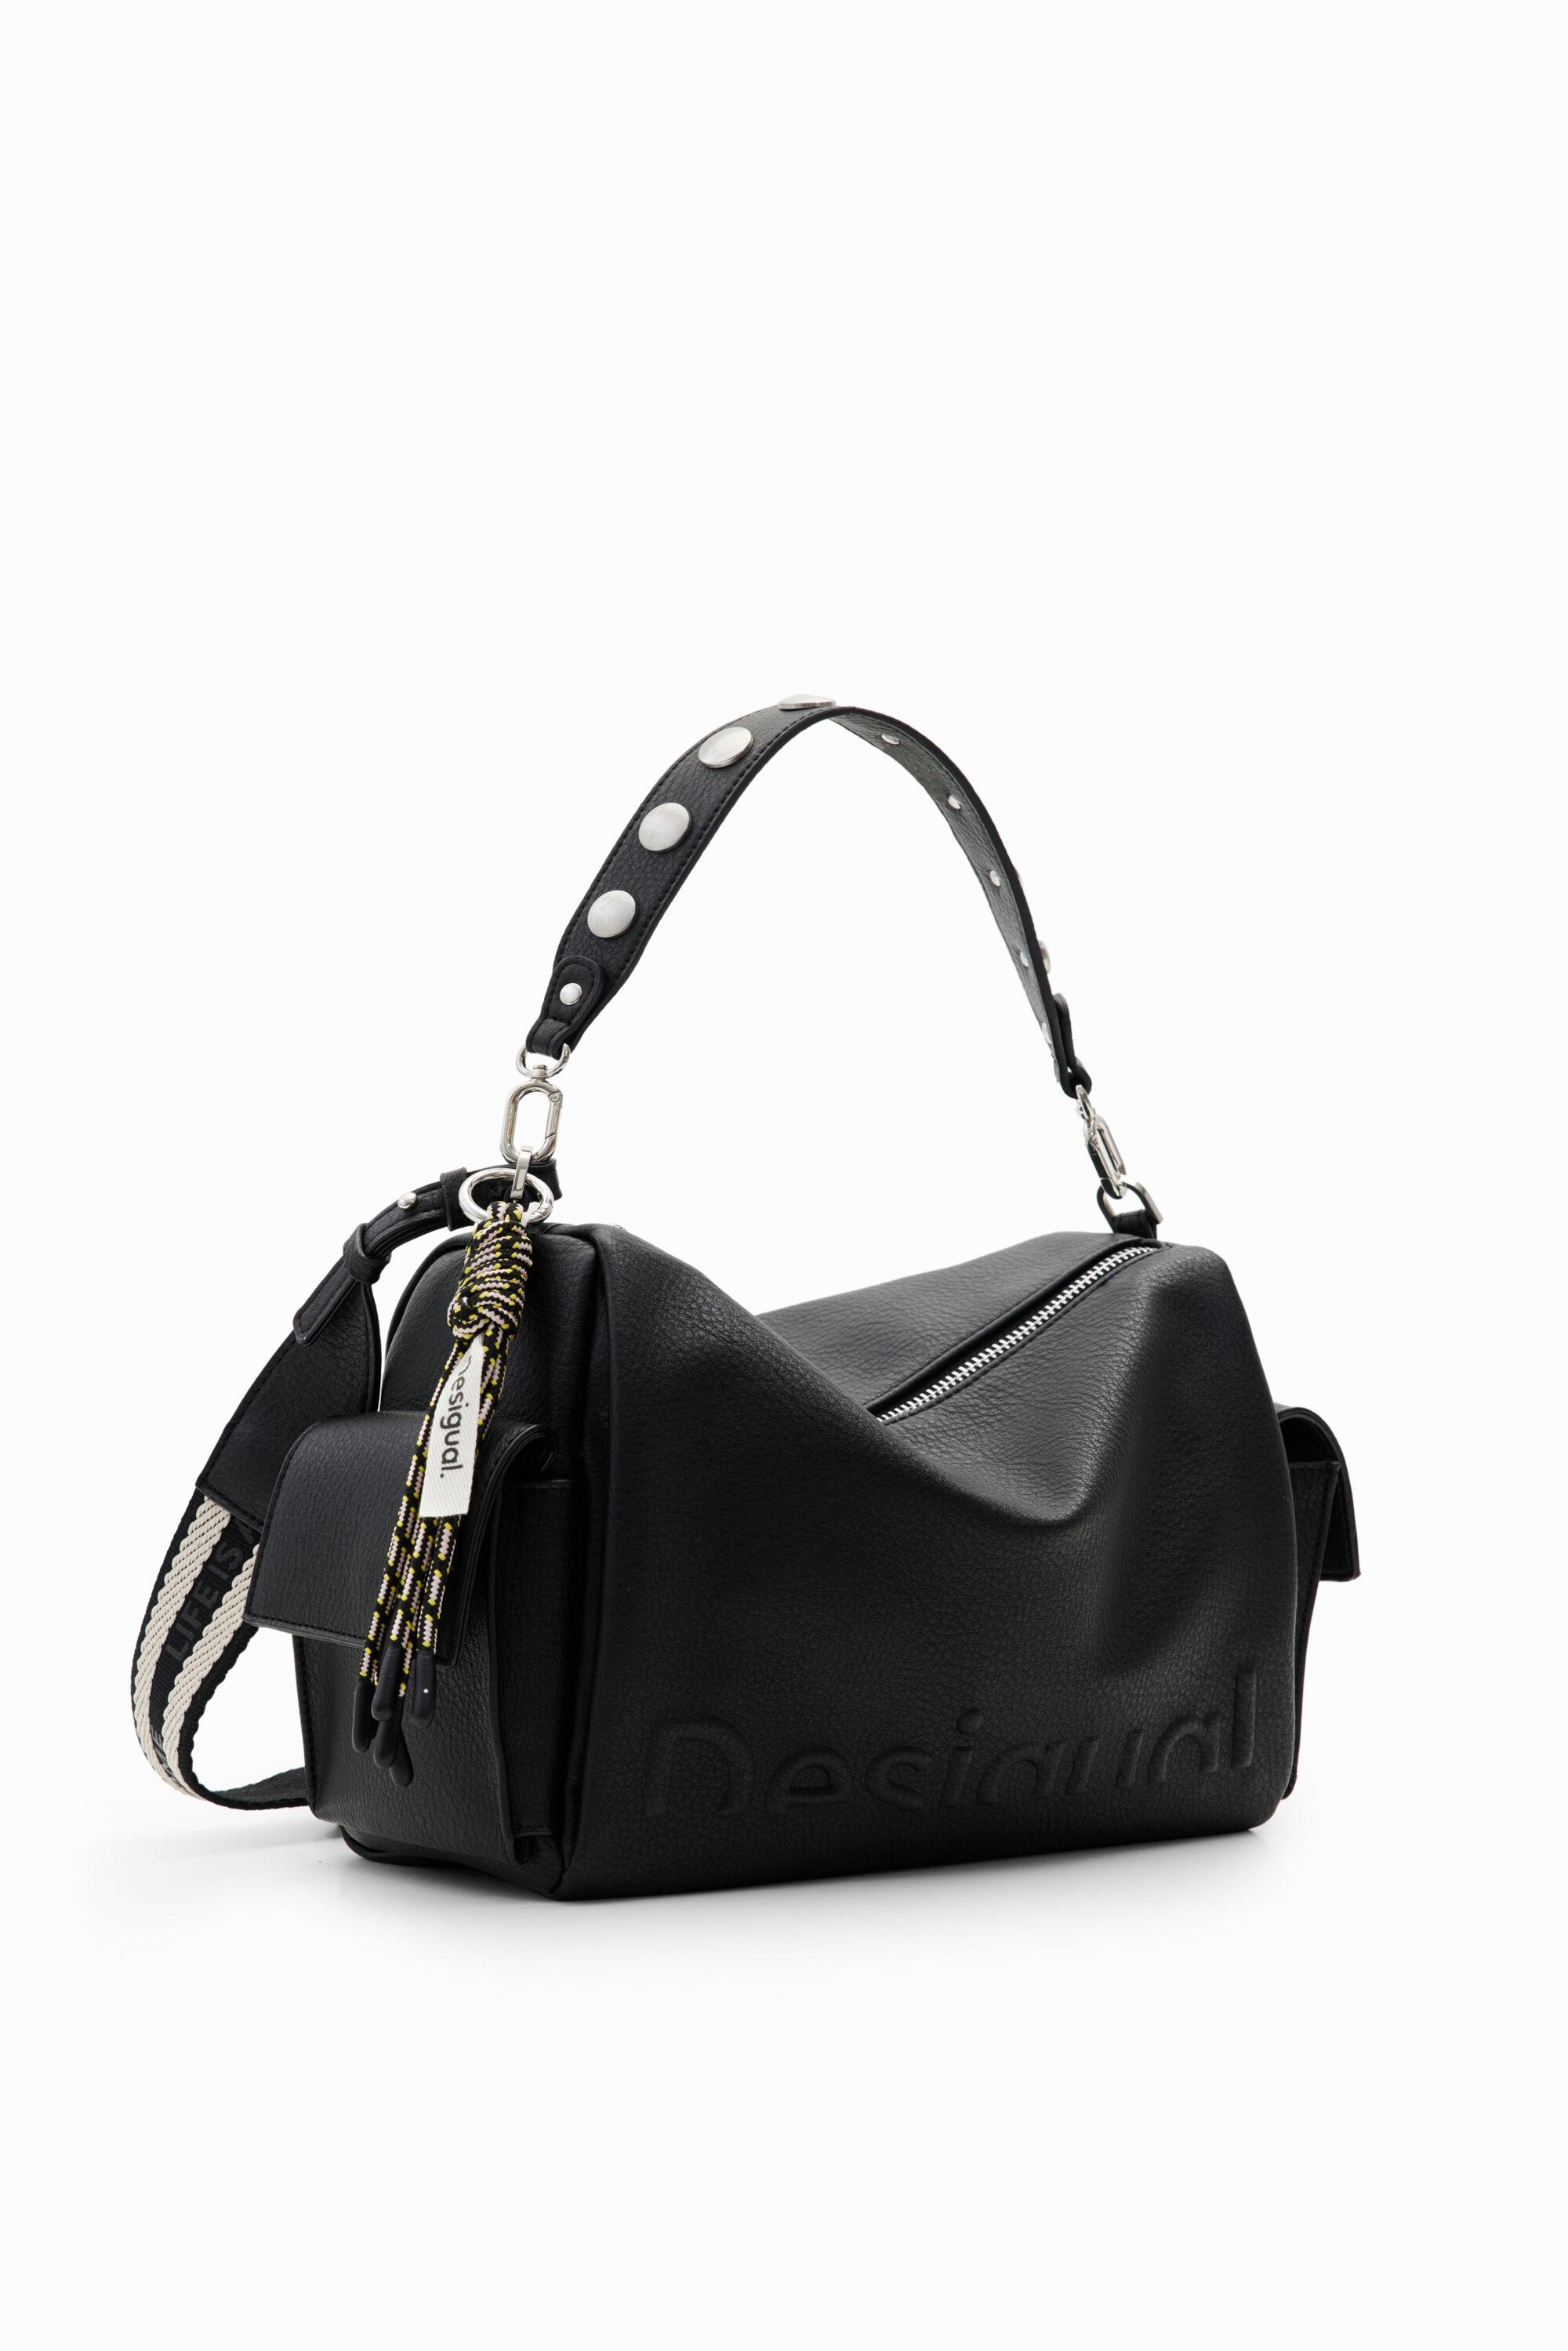 Desigual Midsize Half-logo Bag in Black | Lyst UK